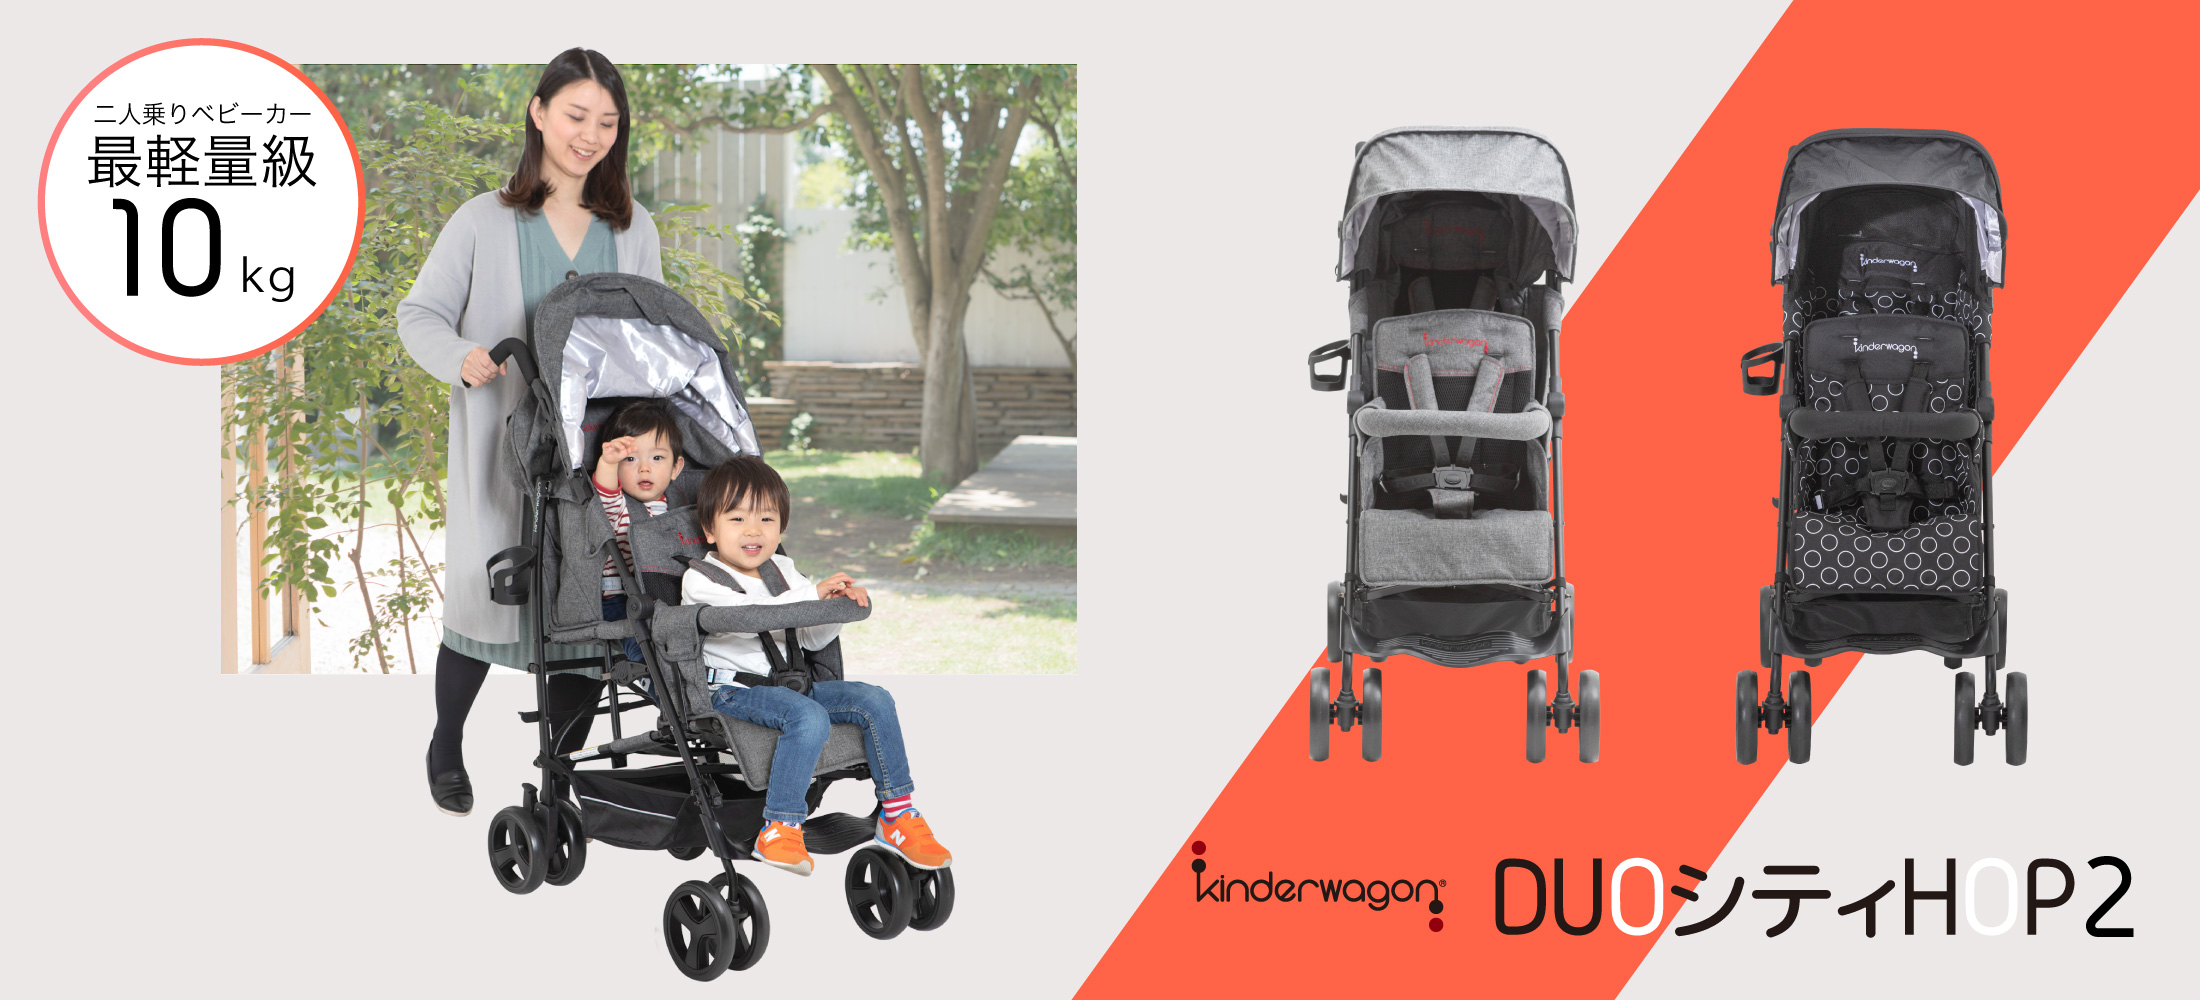 kinderwagon キンダーワゴン DUOシティHOP2 デュオシティホップ2 | 軽量2人乗りベビーカー | 日本育児